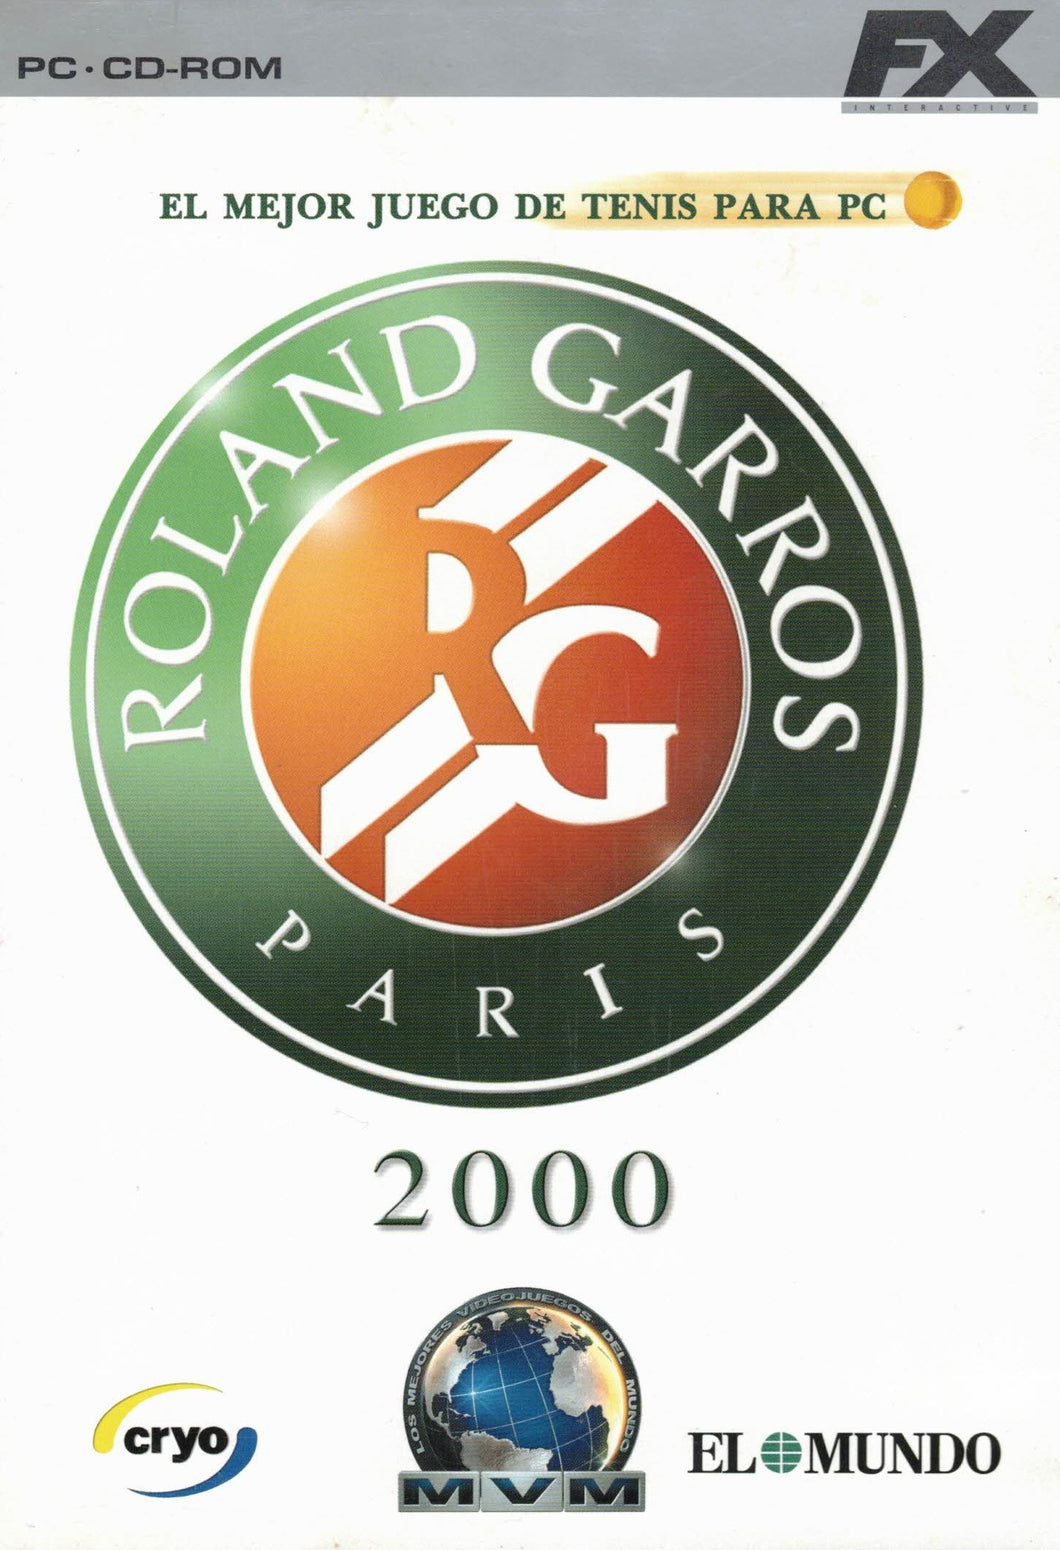 Roland Garros Paris 2000 (PC CD-ROM) C-202 (de segunda mano muy bueno)